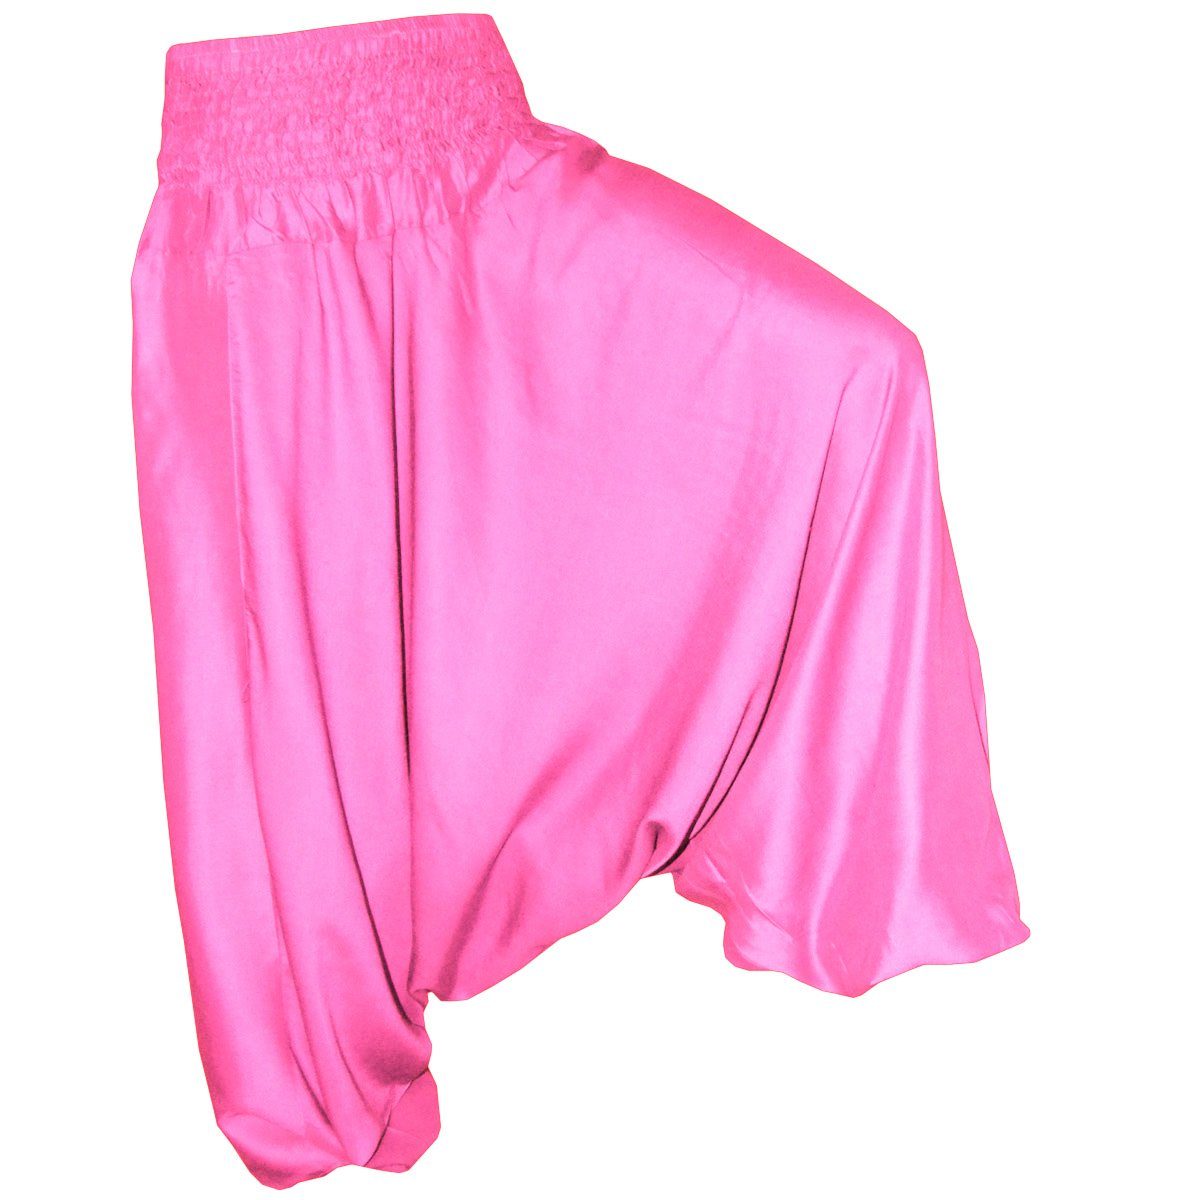 PANASIAM Relaxhose Aladinhose einfarbig Haremshose aus 100% natürlicher Viskose Pumphose für Damen bequeme Freizeithose Pluderhose pink